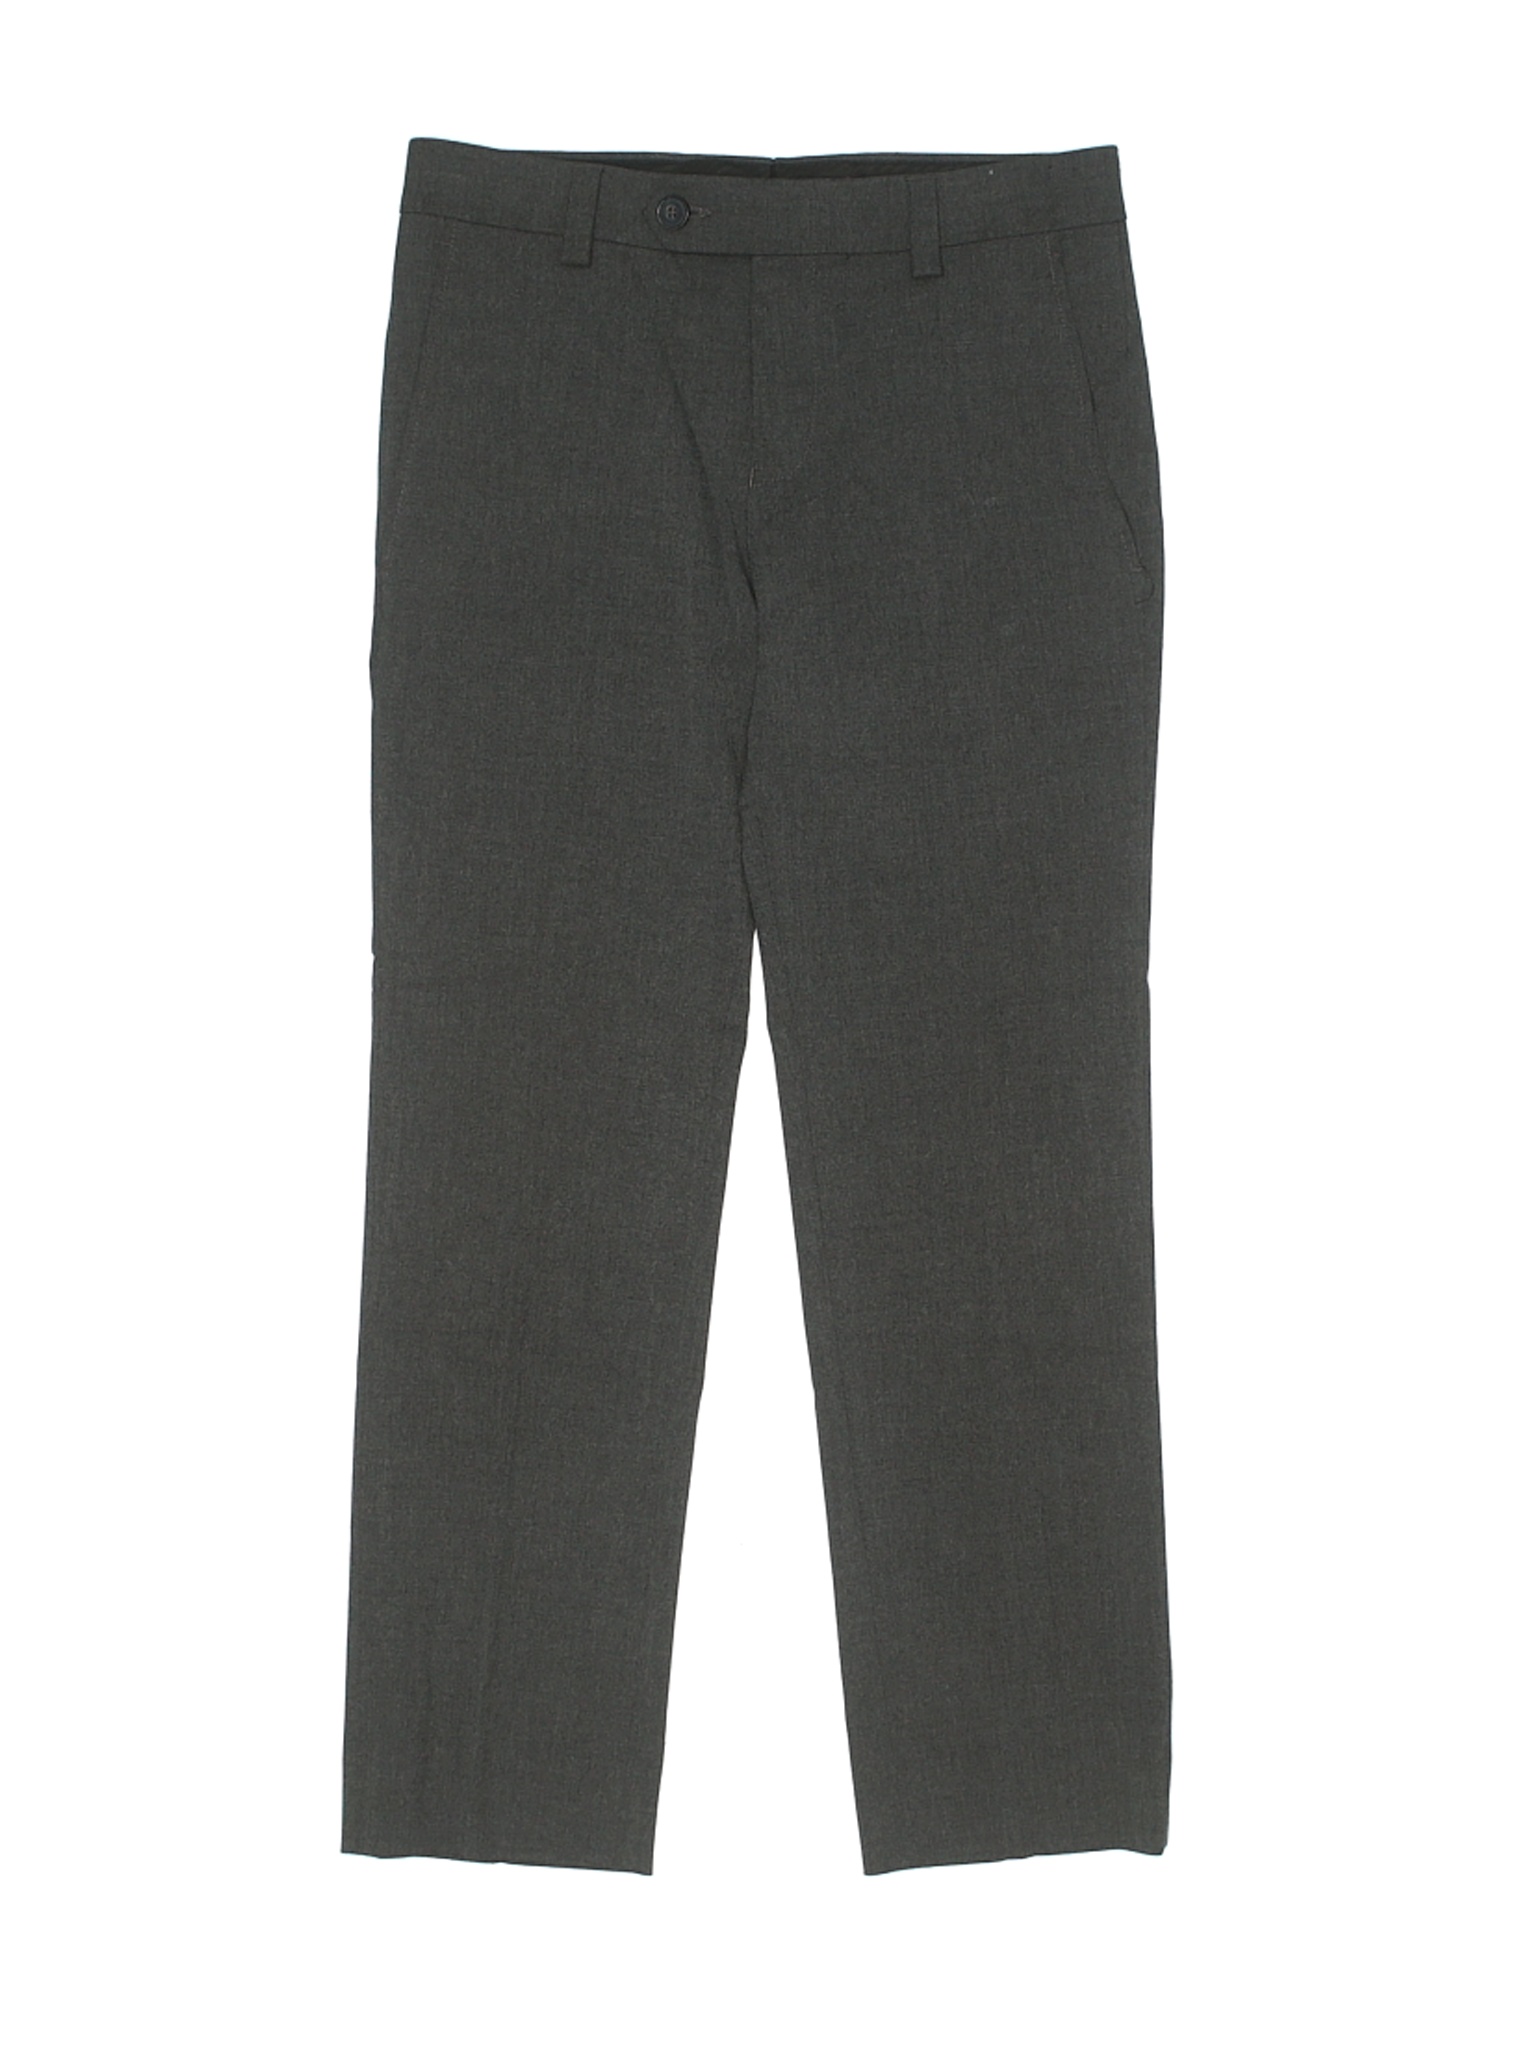 Assorted Brands Boys Gray Dress Pants 8 | eBay